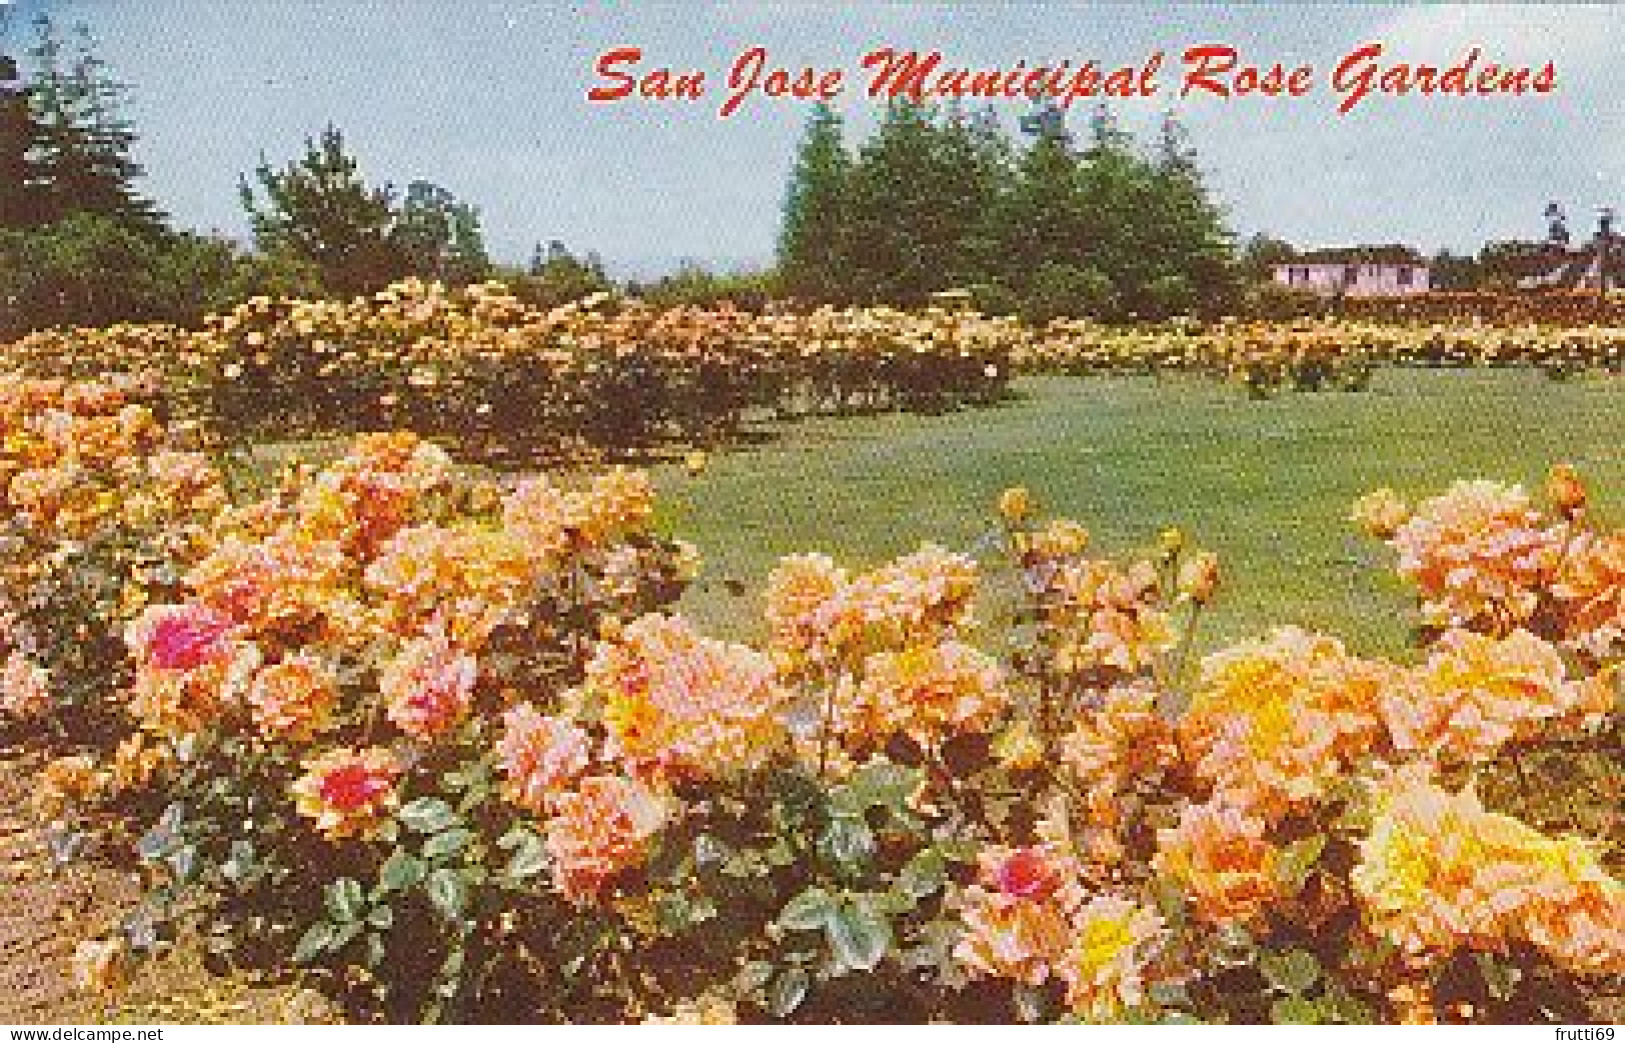 AK 176245 USA - California - San Jose Municipal Rose Gardens - San Jose